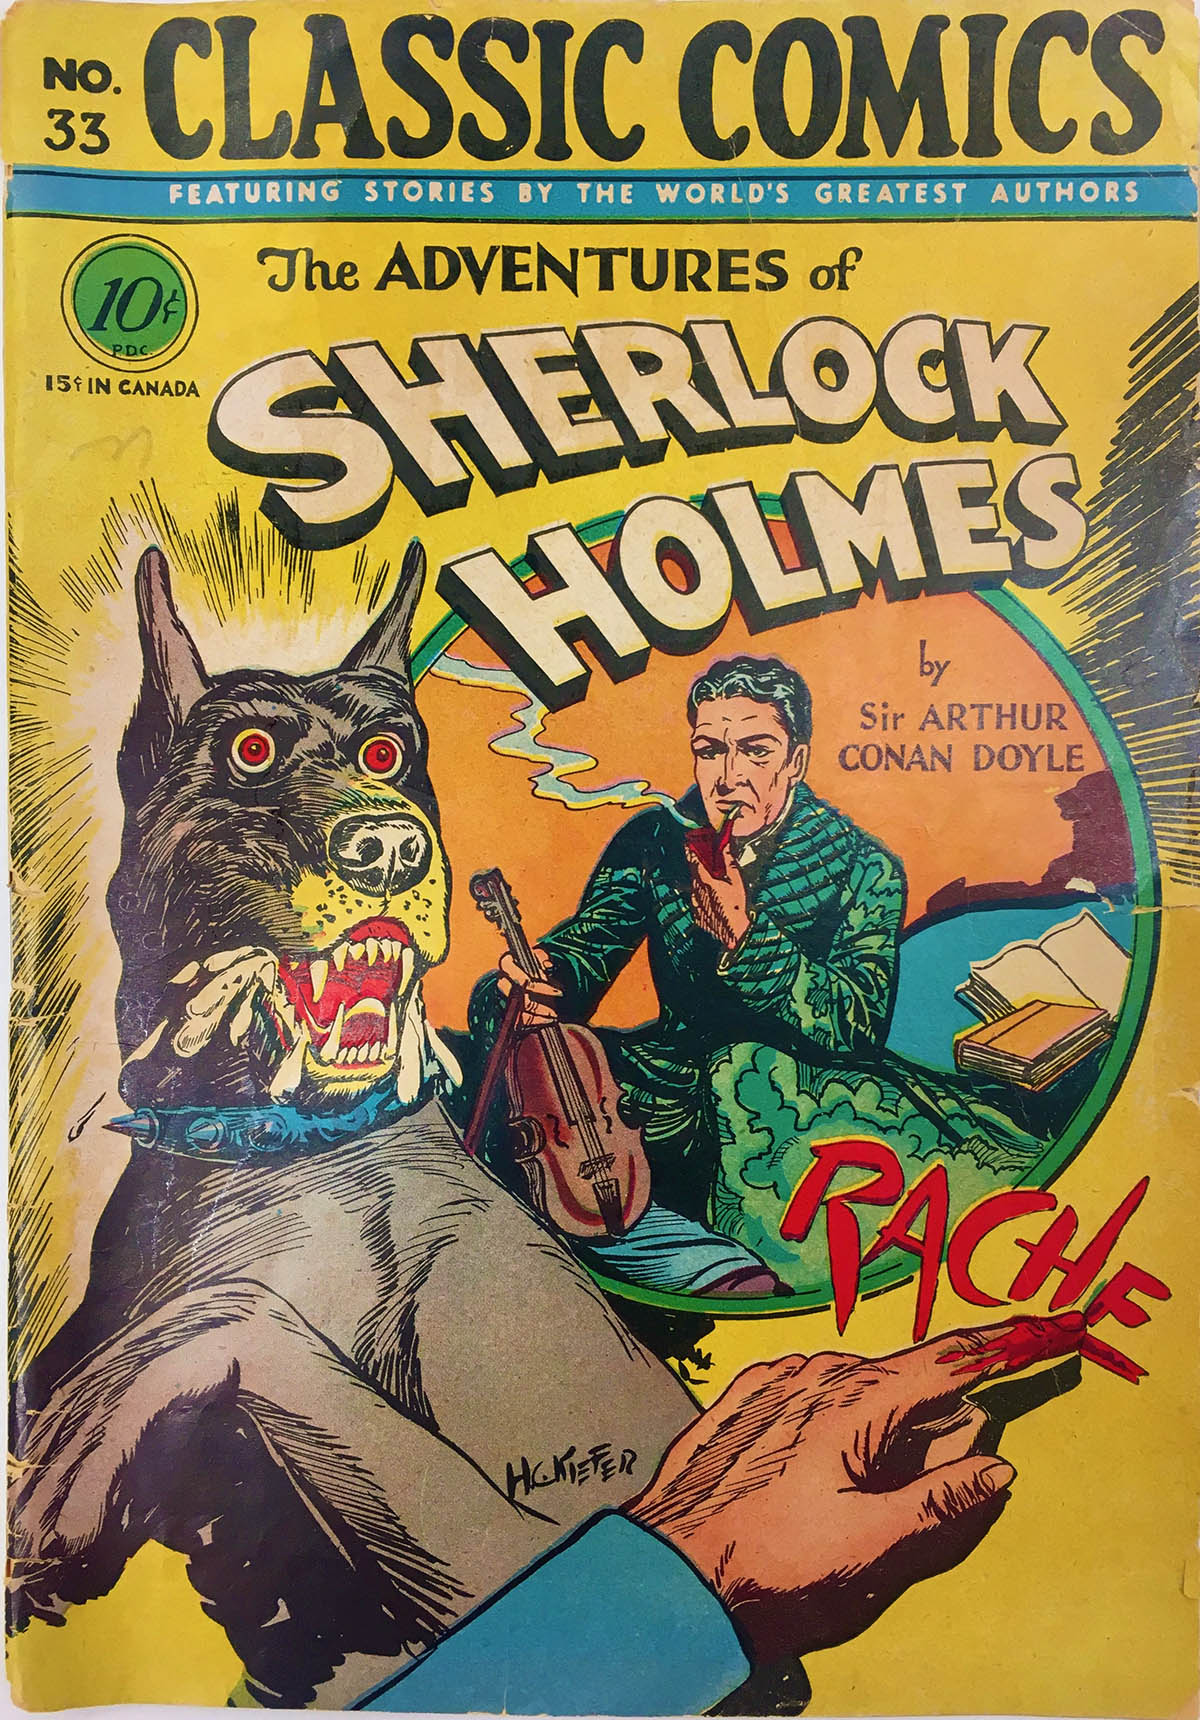 Doyle, Arthur Conan. “The Adventures of Sherlock Holmes” Classic Comics, no. 33 (January 1947).